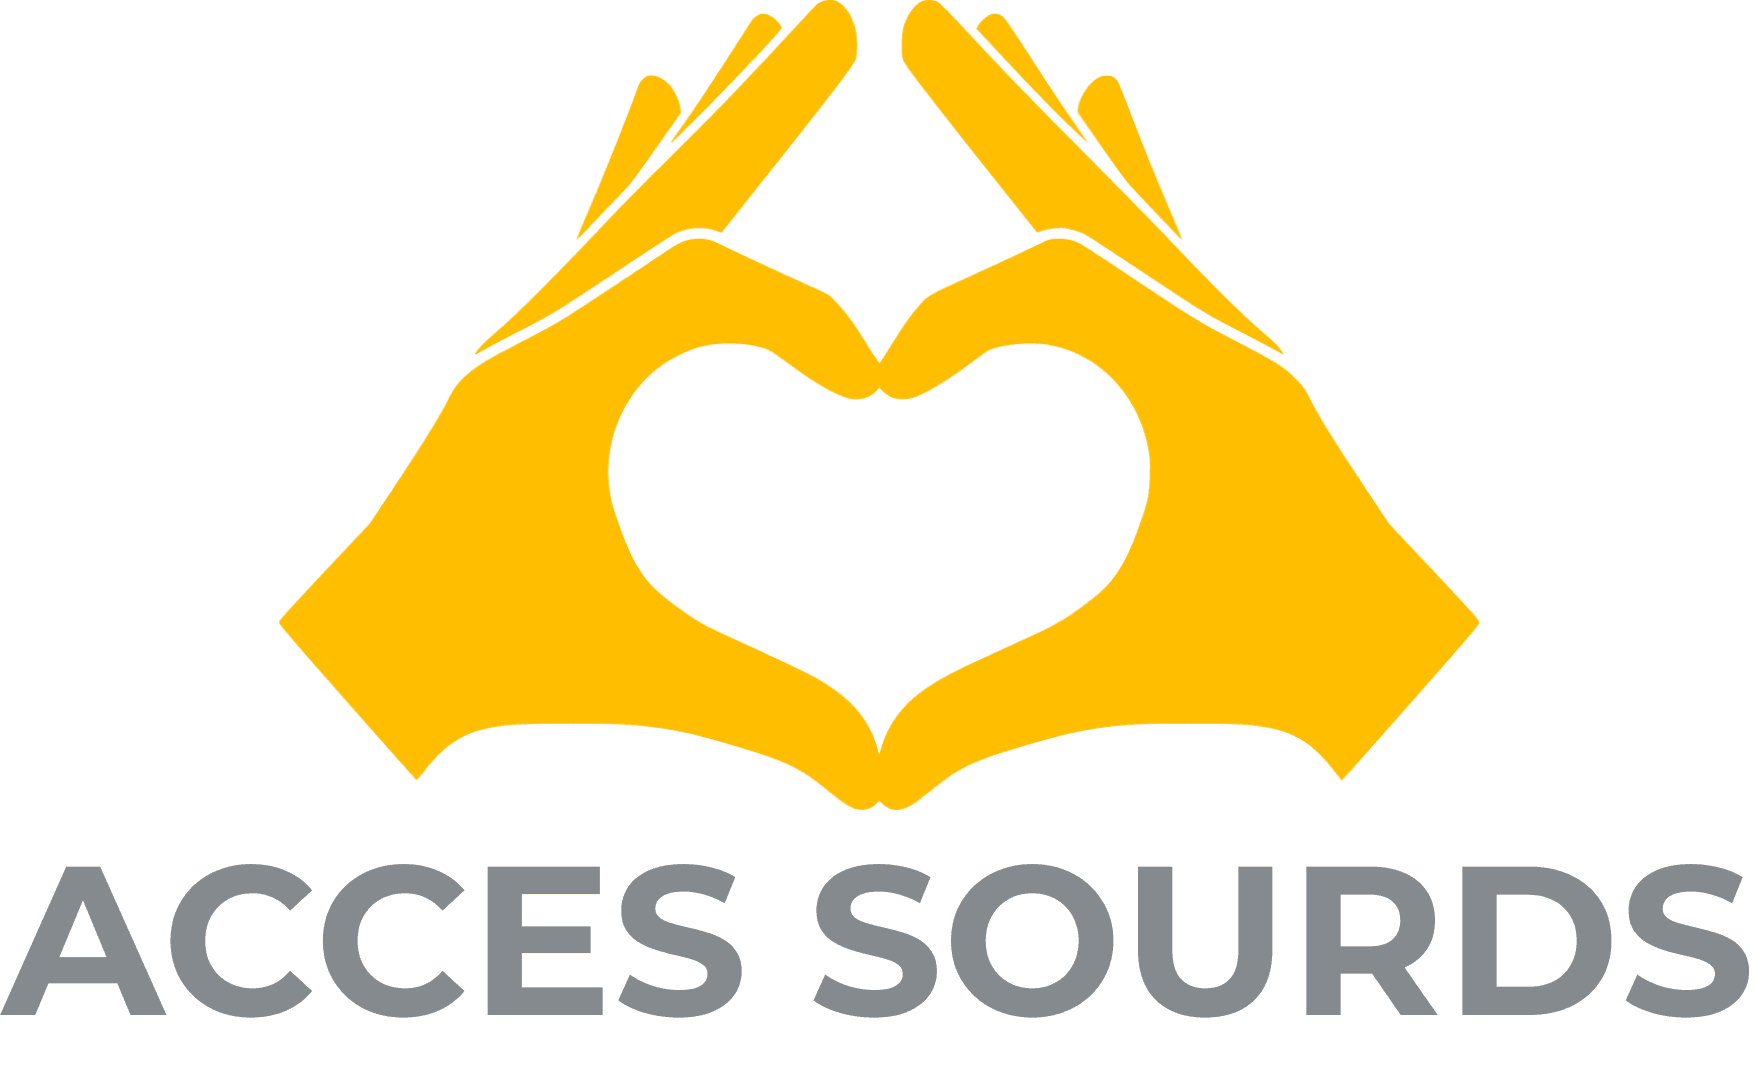 AccesSourds logo